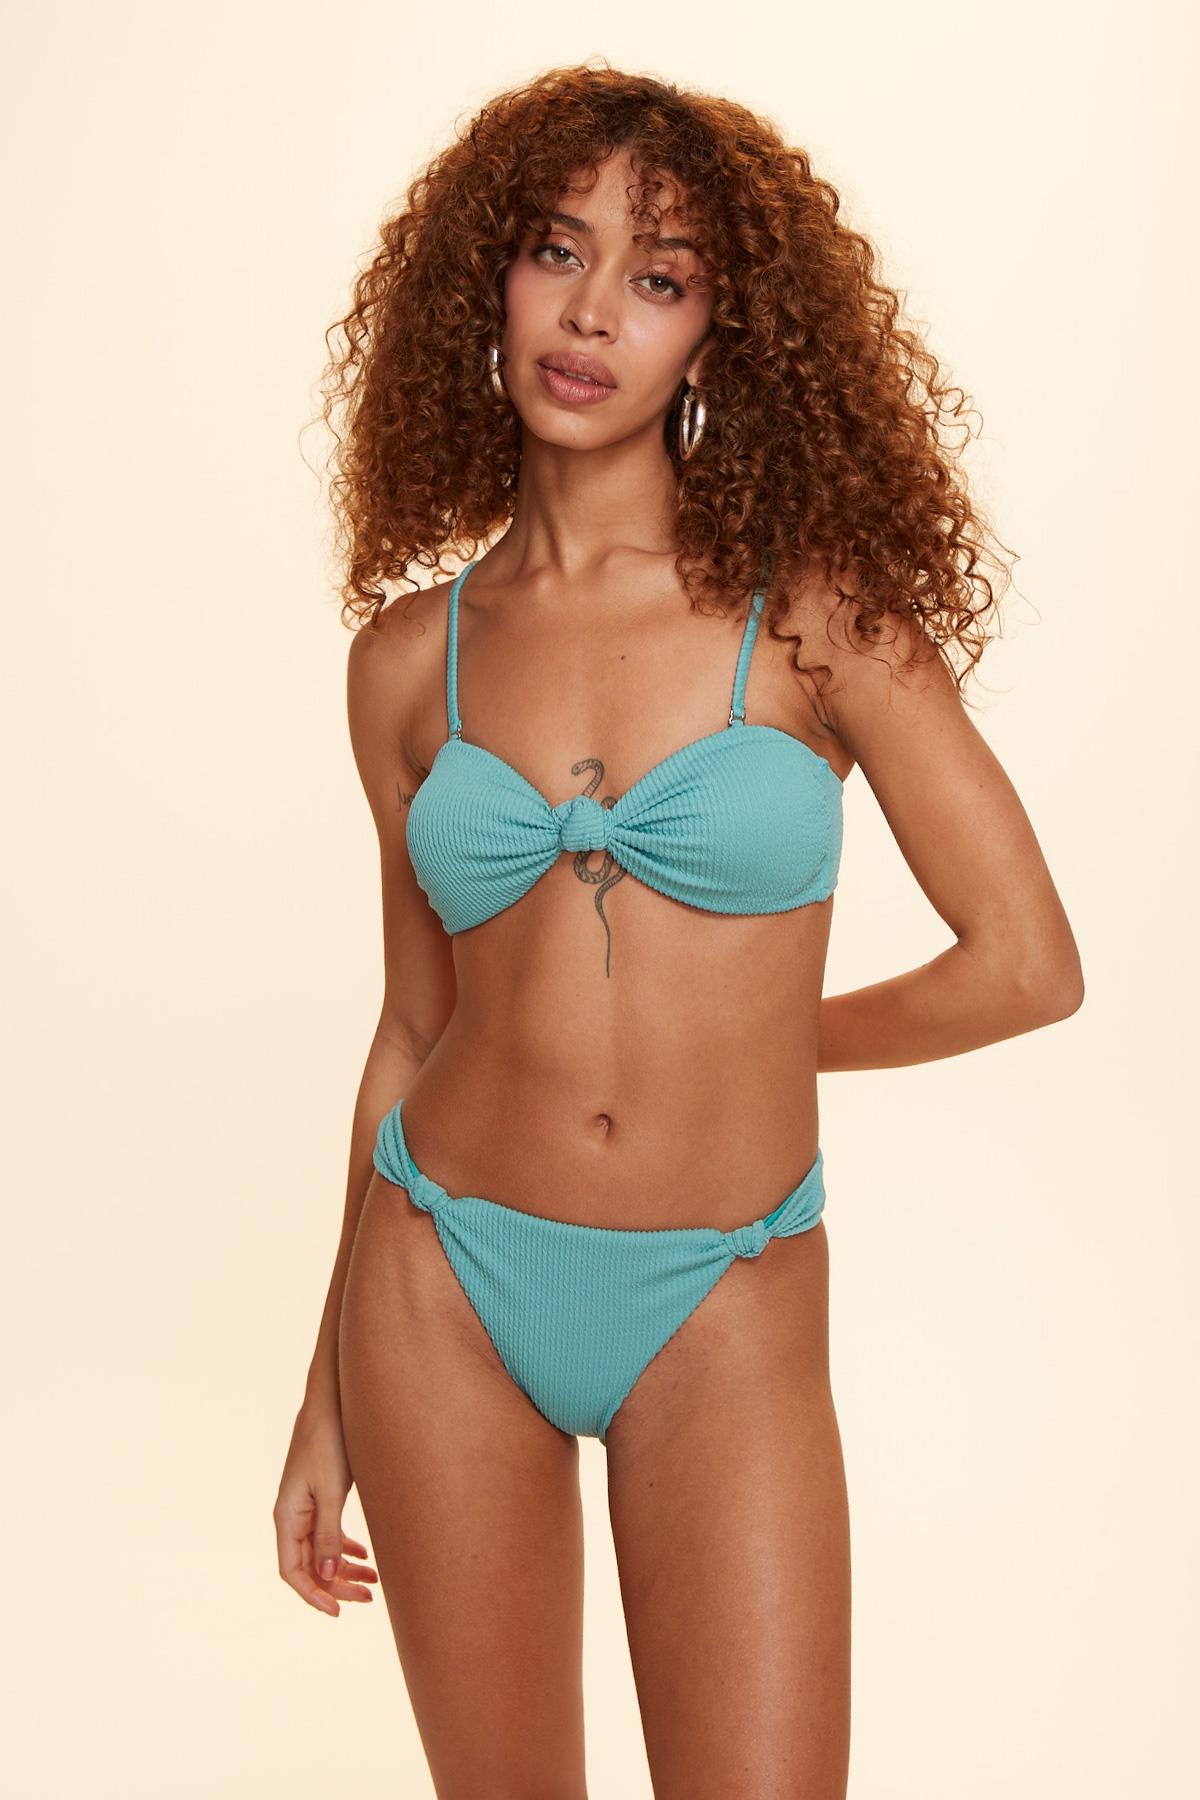 No Gossip Leona Nod with Soft Strapless Bikini Single Nile Green 229118